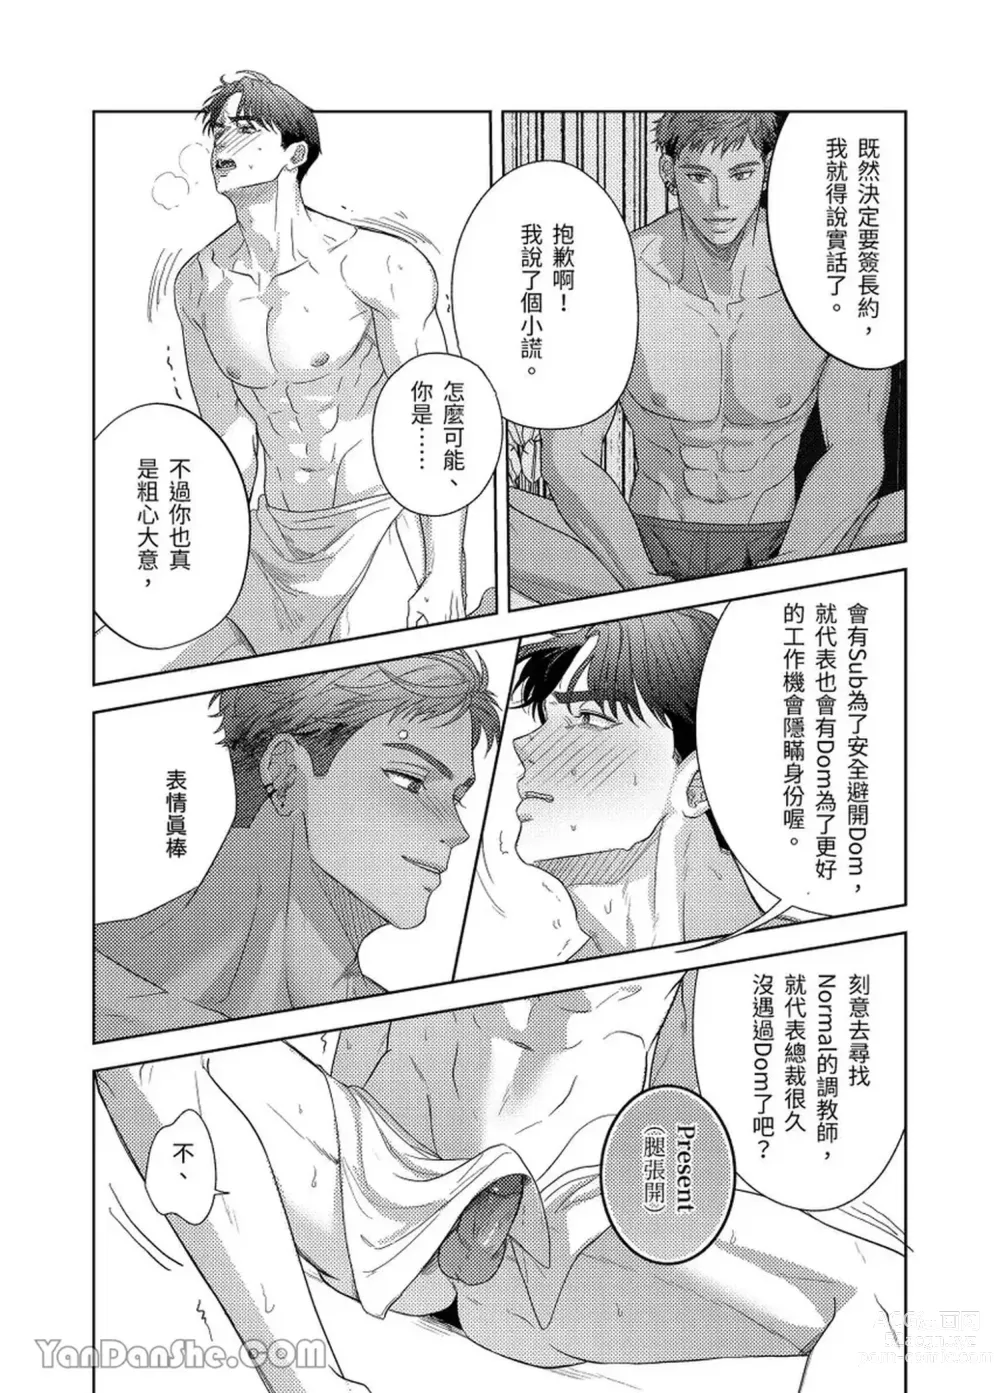 Page 33 of manga Dom&Sub